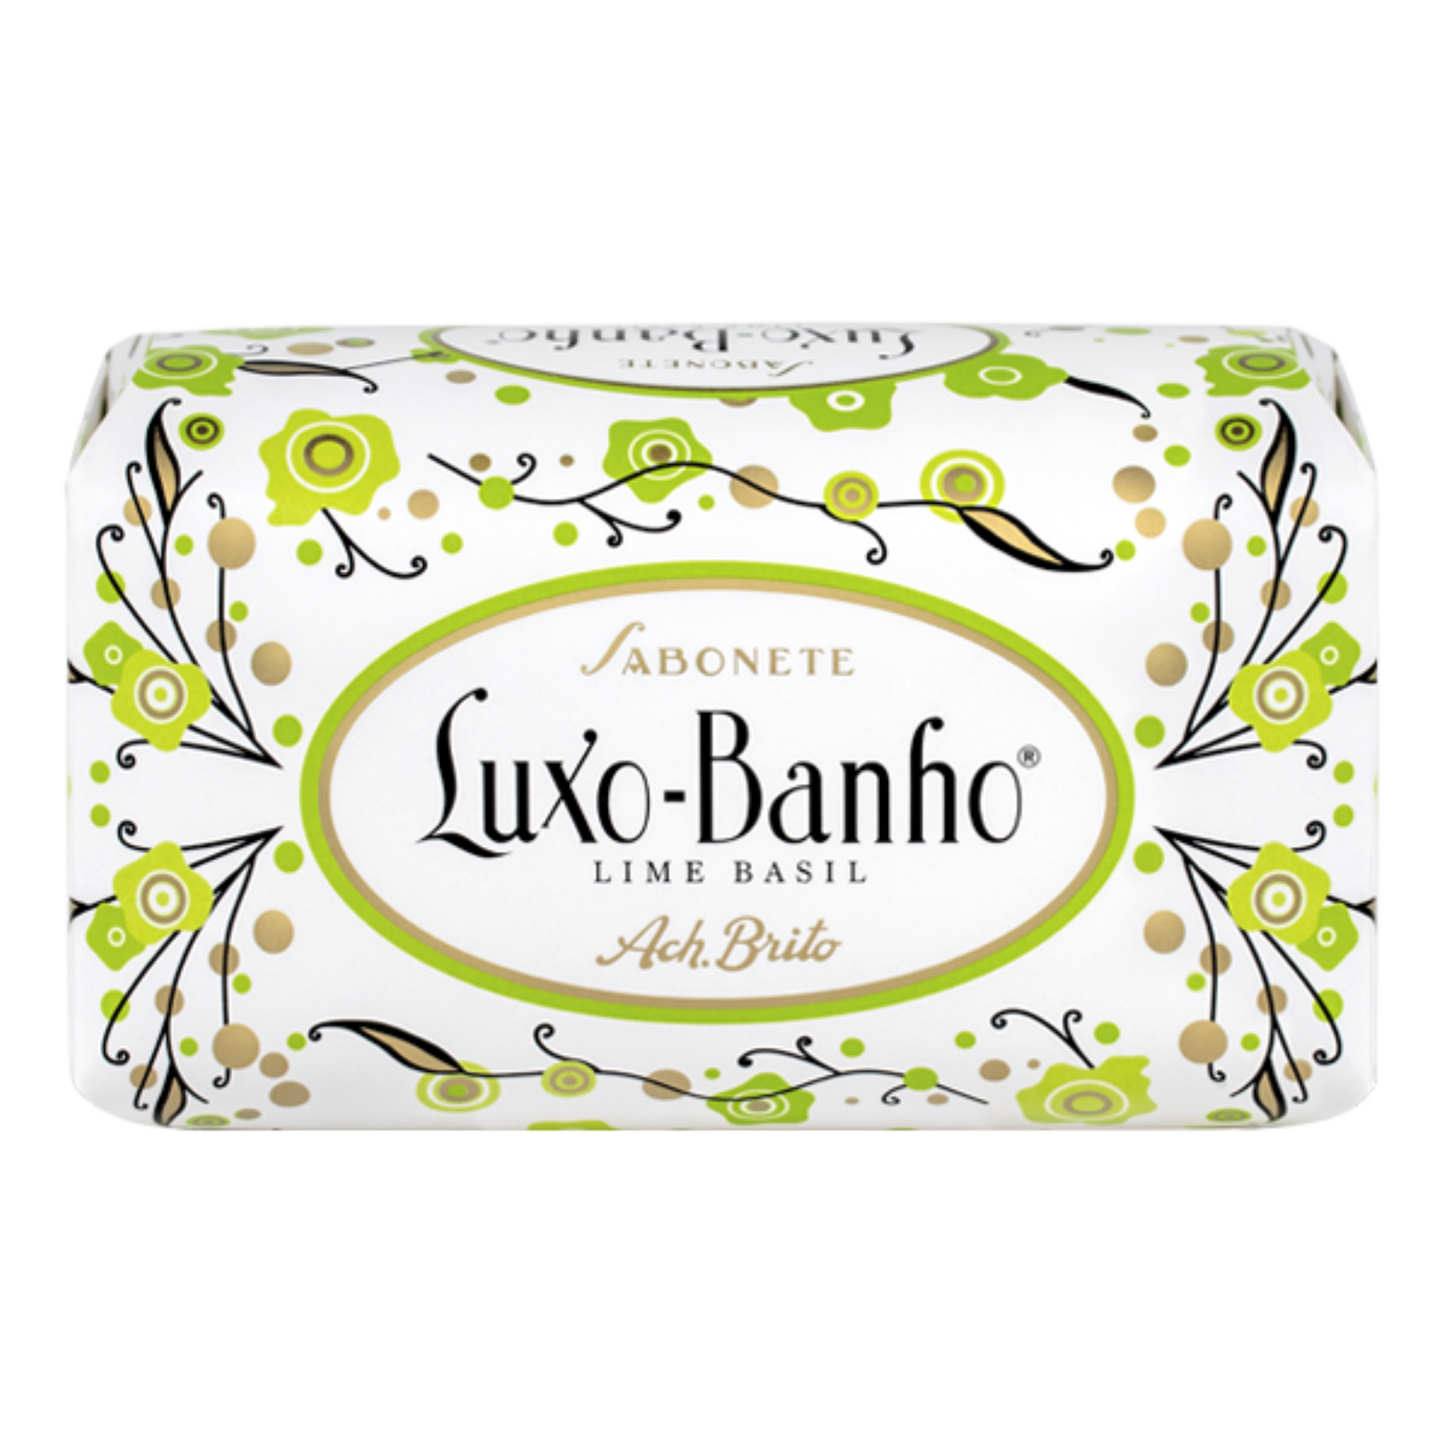 Primary Image of Luxo-Banho Lime Basil Bar Soap 